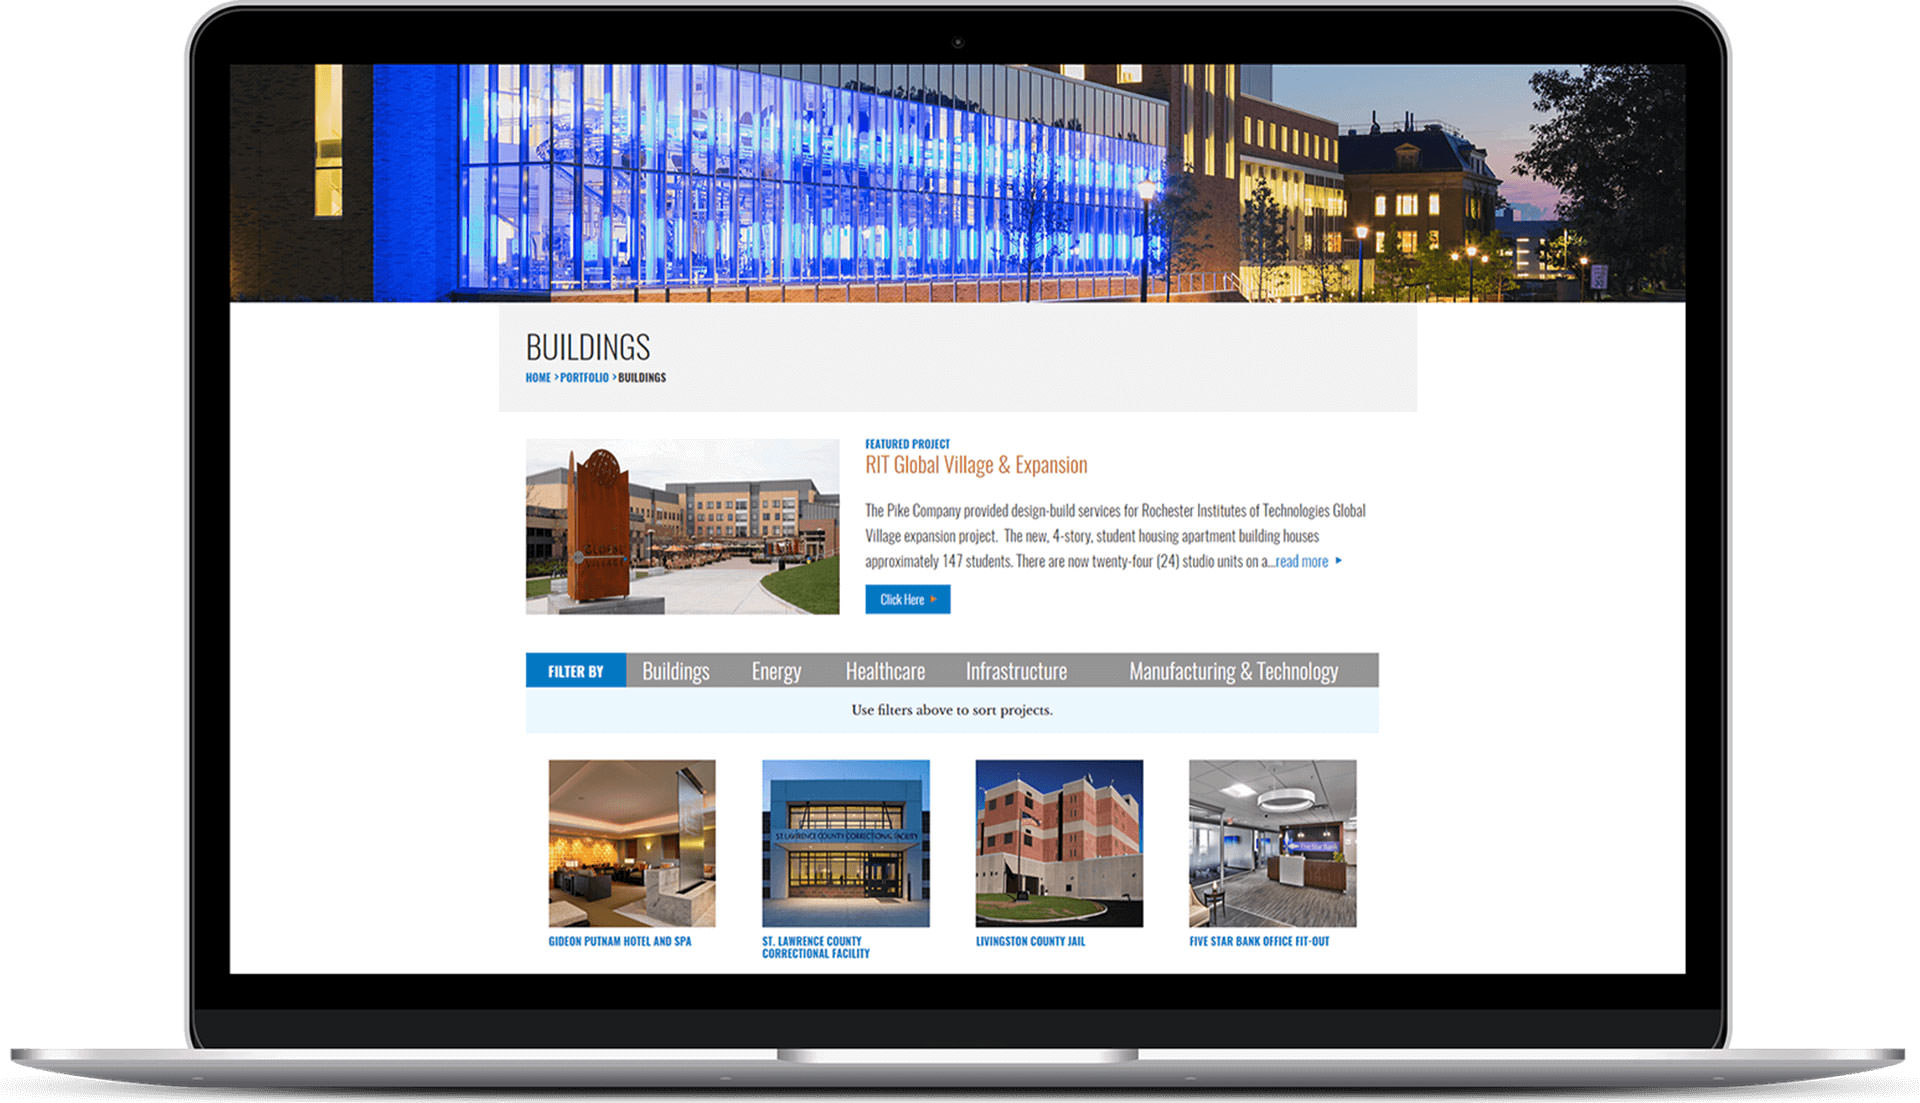 Pike Company Buildings portfolio page displayed on laptop